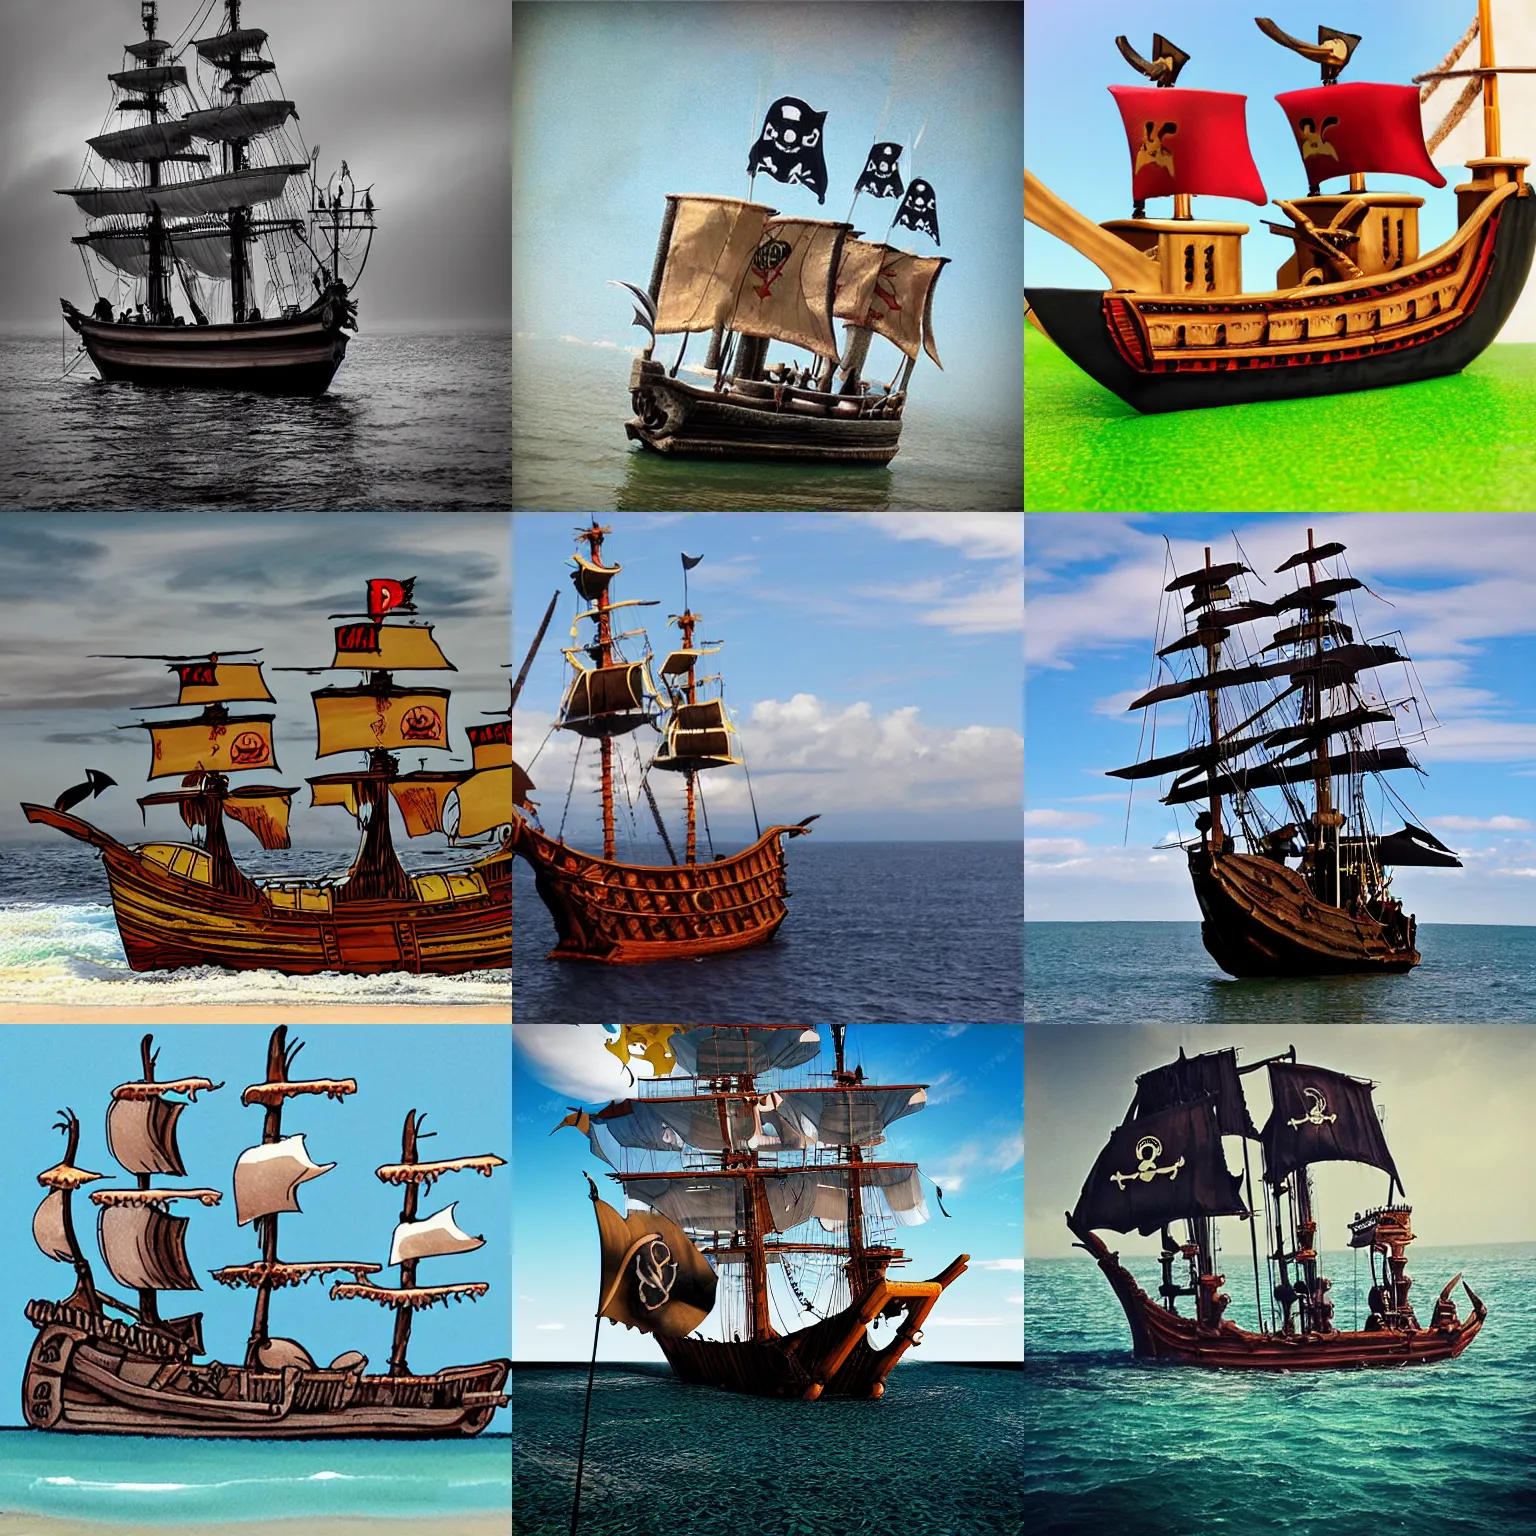 Prompt: Pirate ship